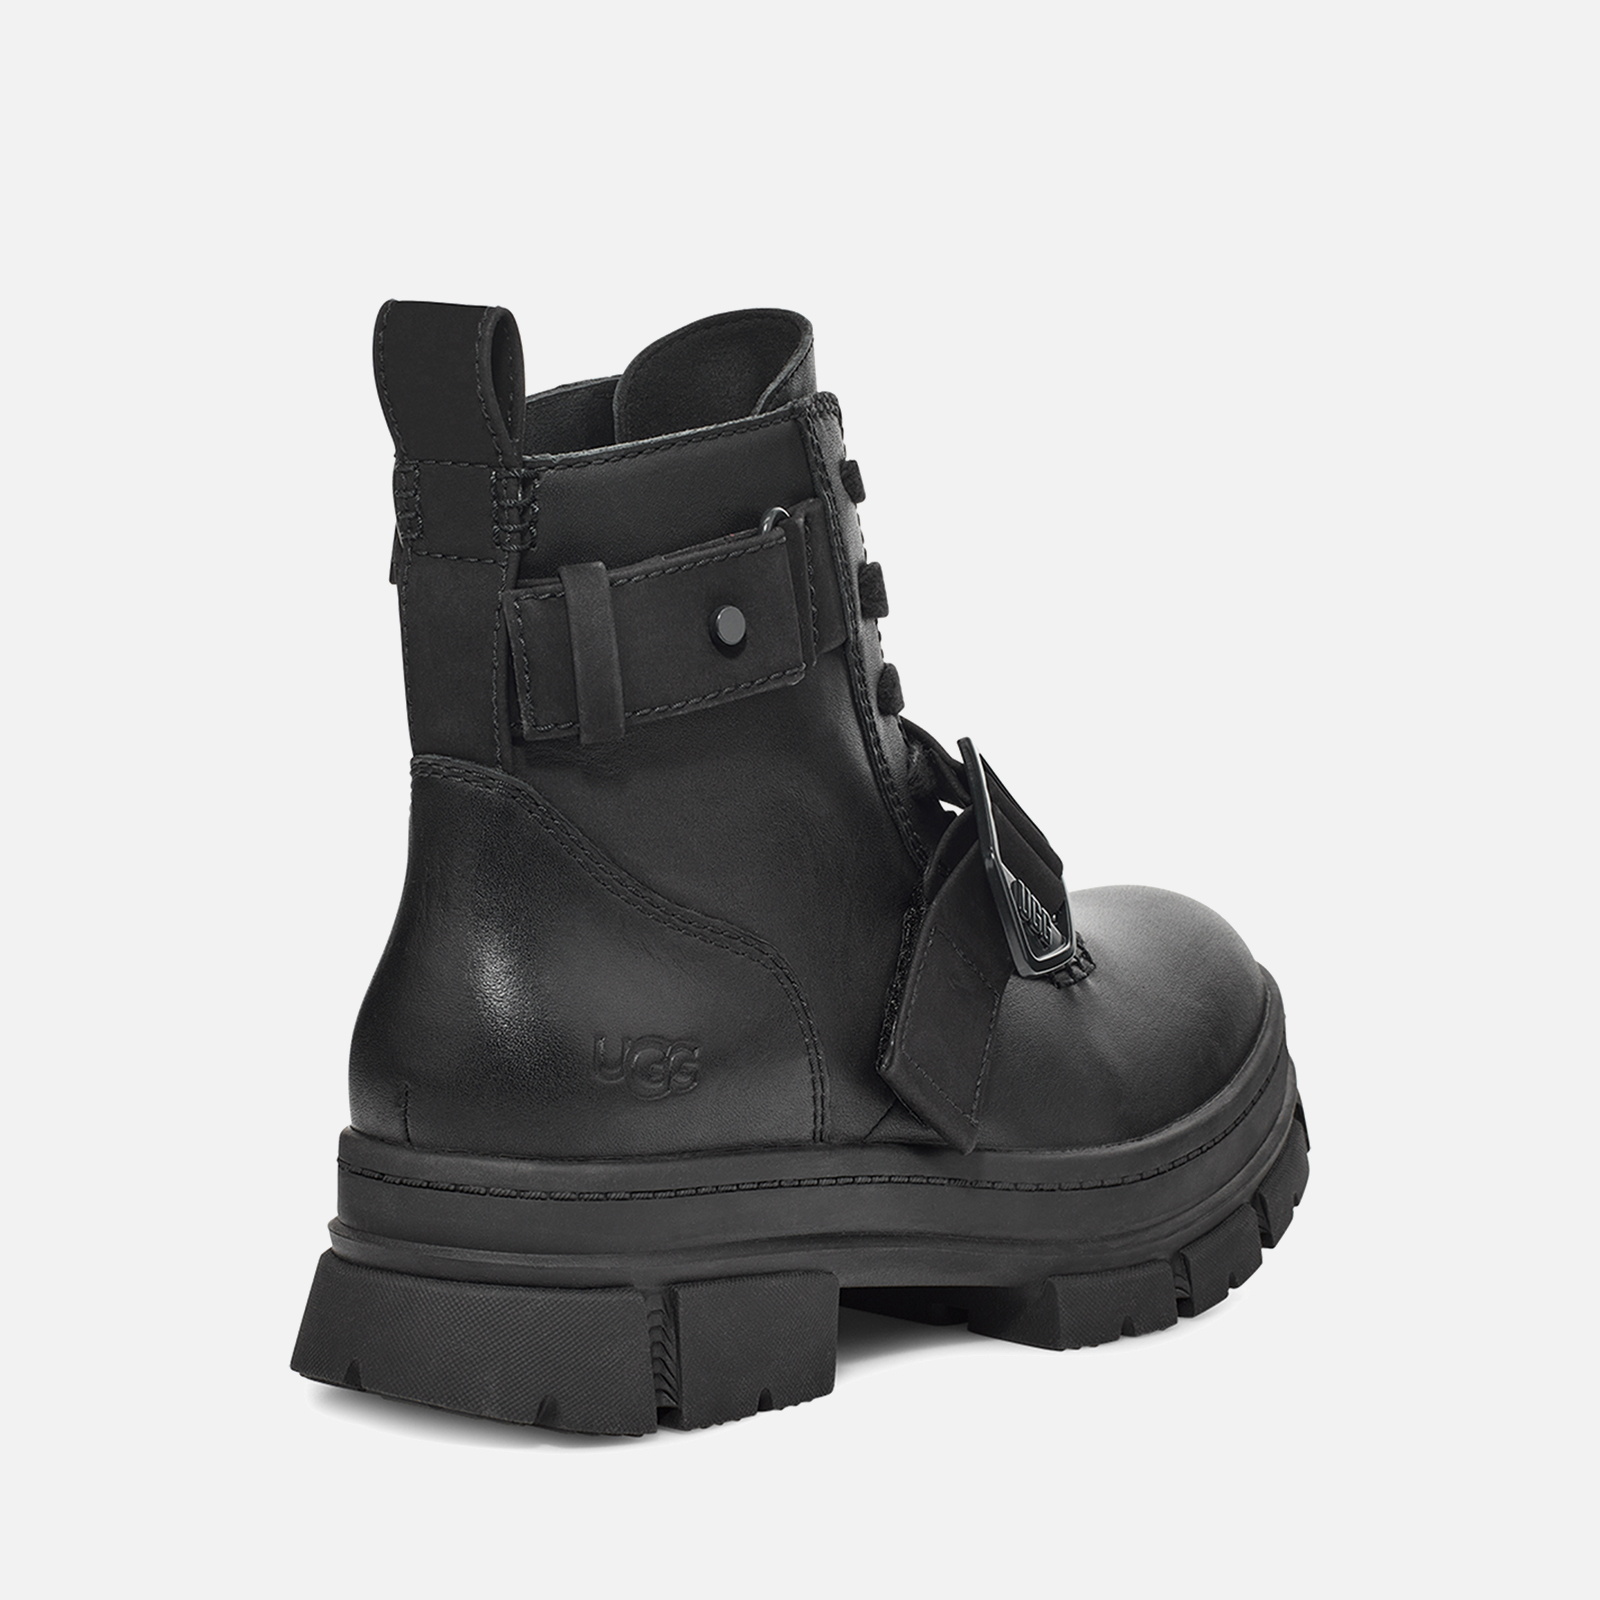 UGG Ashton Waterproof Leather Ankle Boots - UK 3 | Allsole